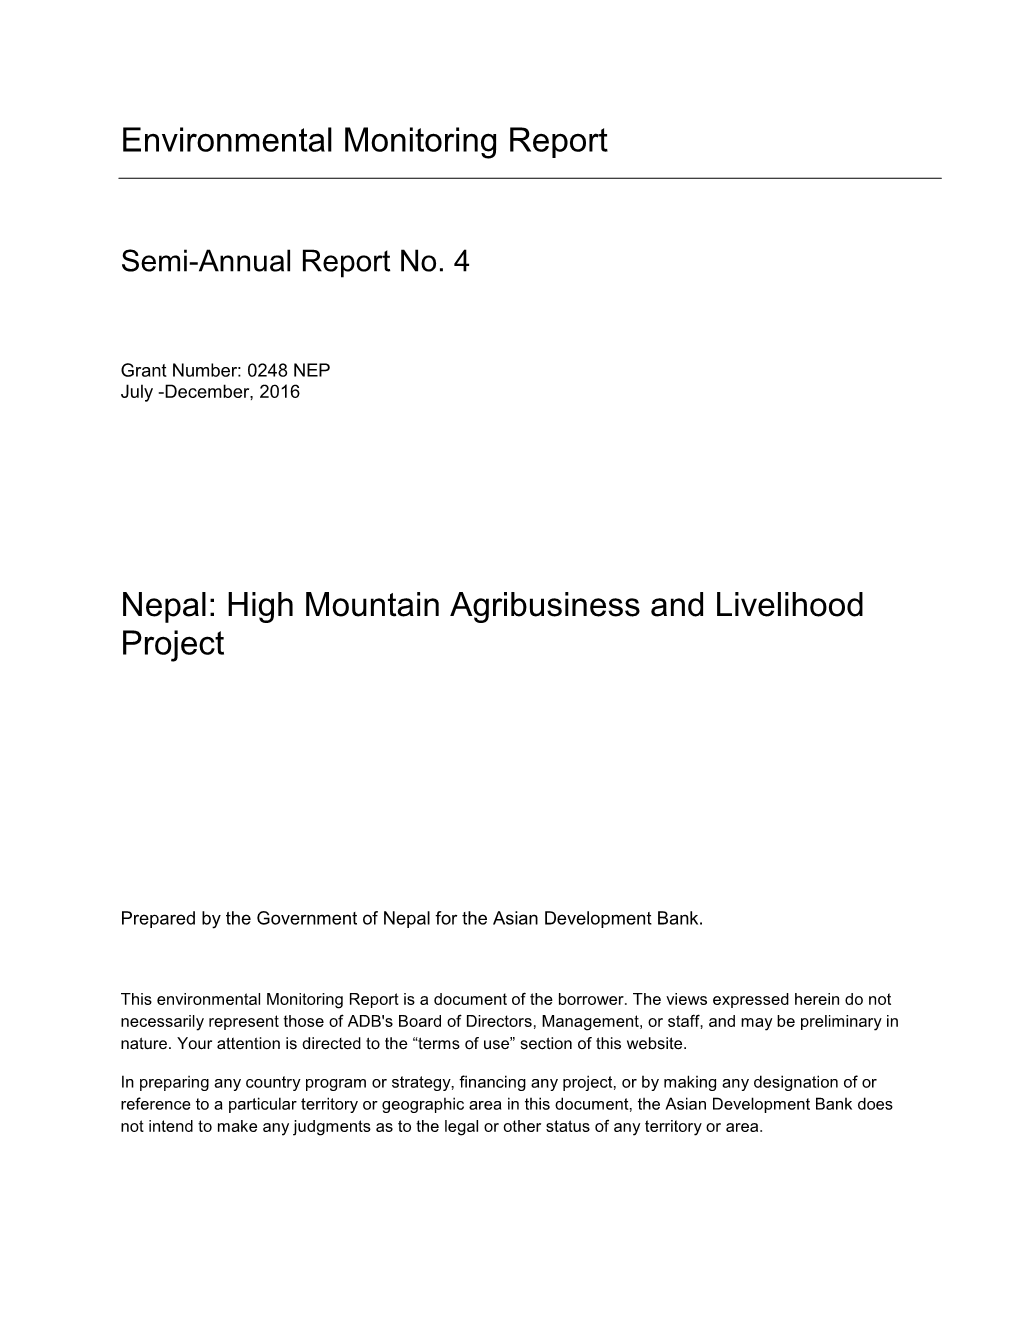 Environmental Monitoring Report Nepal: High Mountain Agribusiness